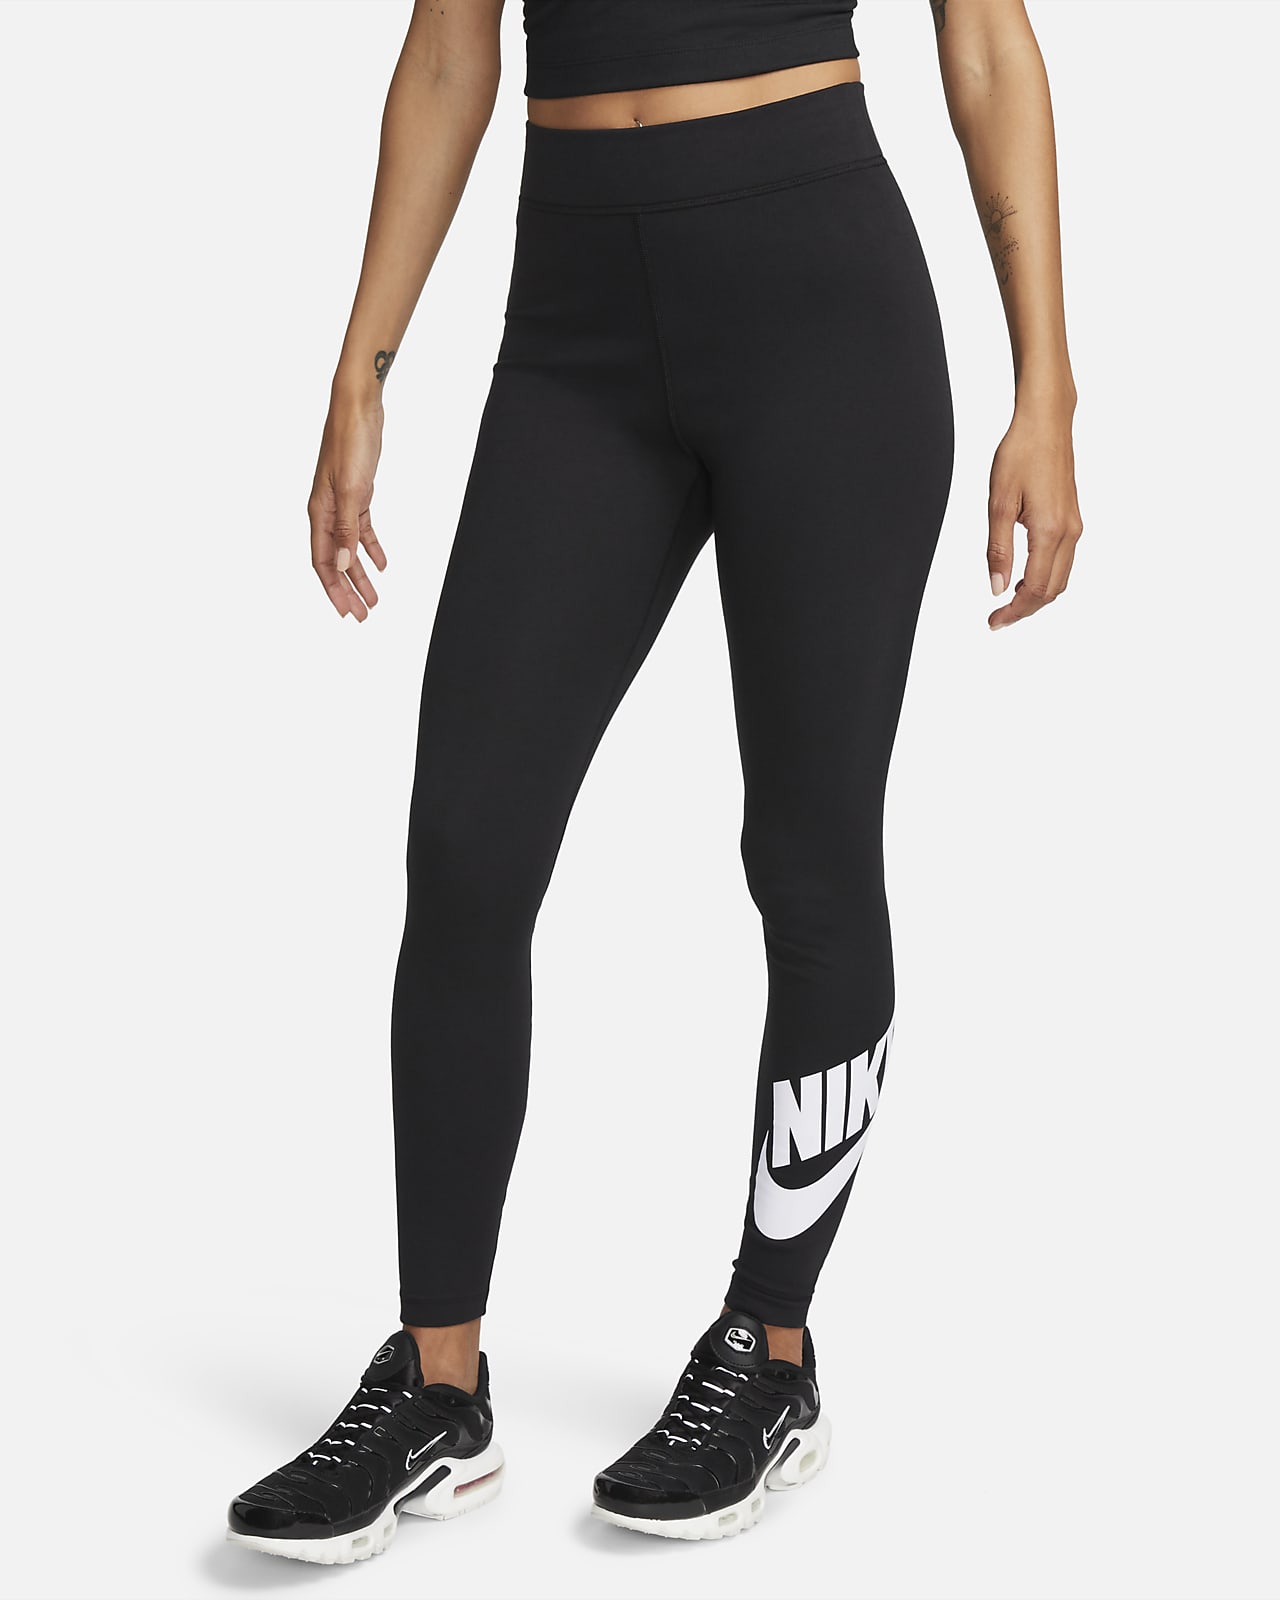 Women's Grey Tights & Leggings. Nike PT